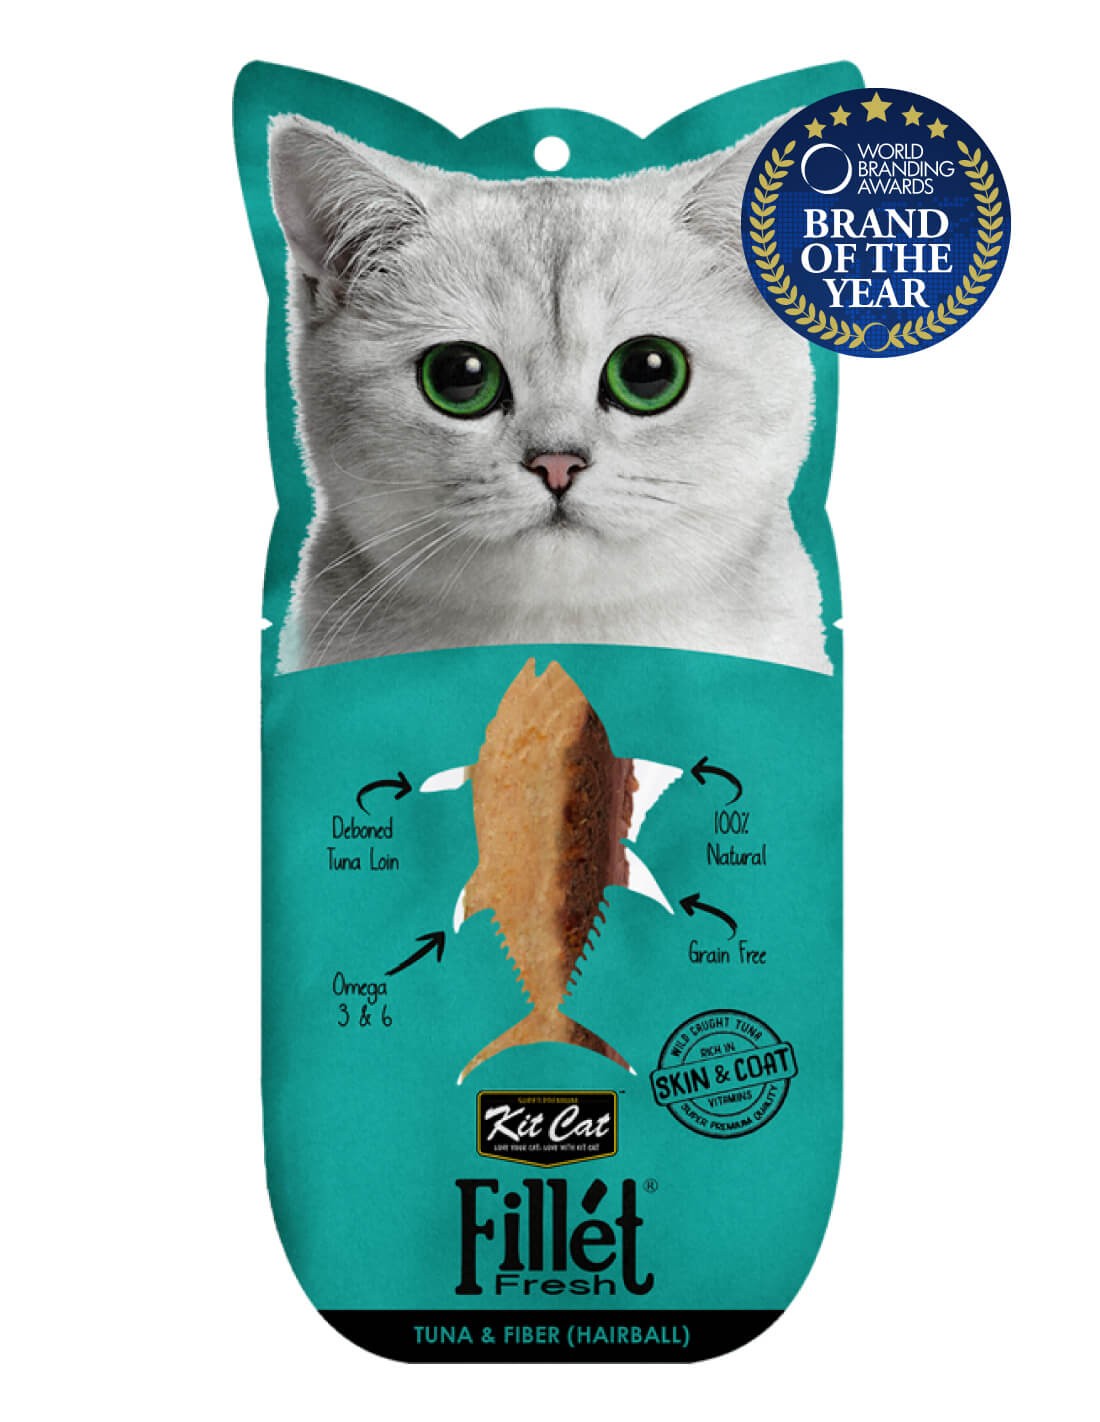 KIT CAT Filete Atún y Fibra (Hairball) 30g